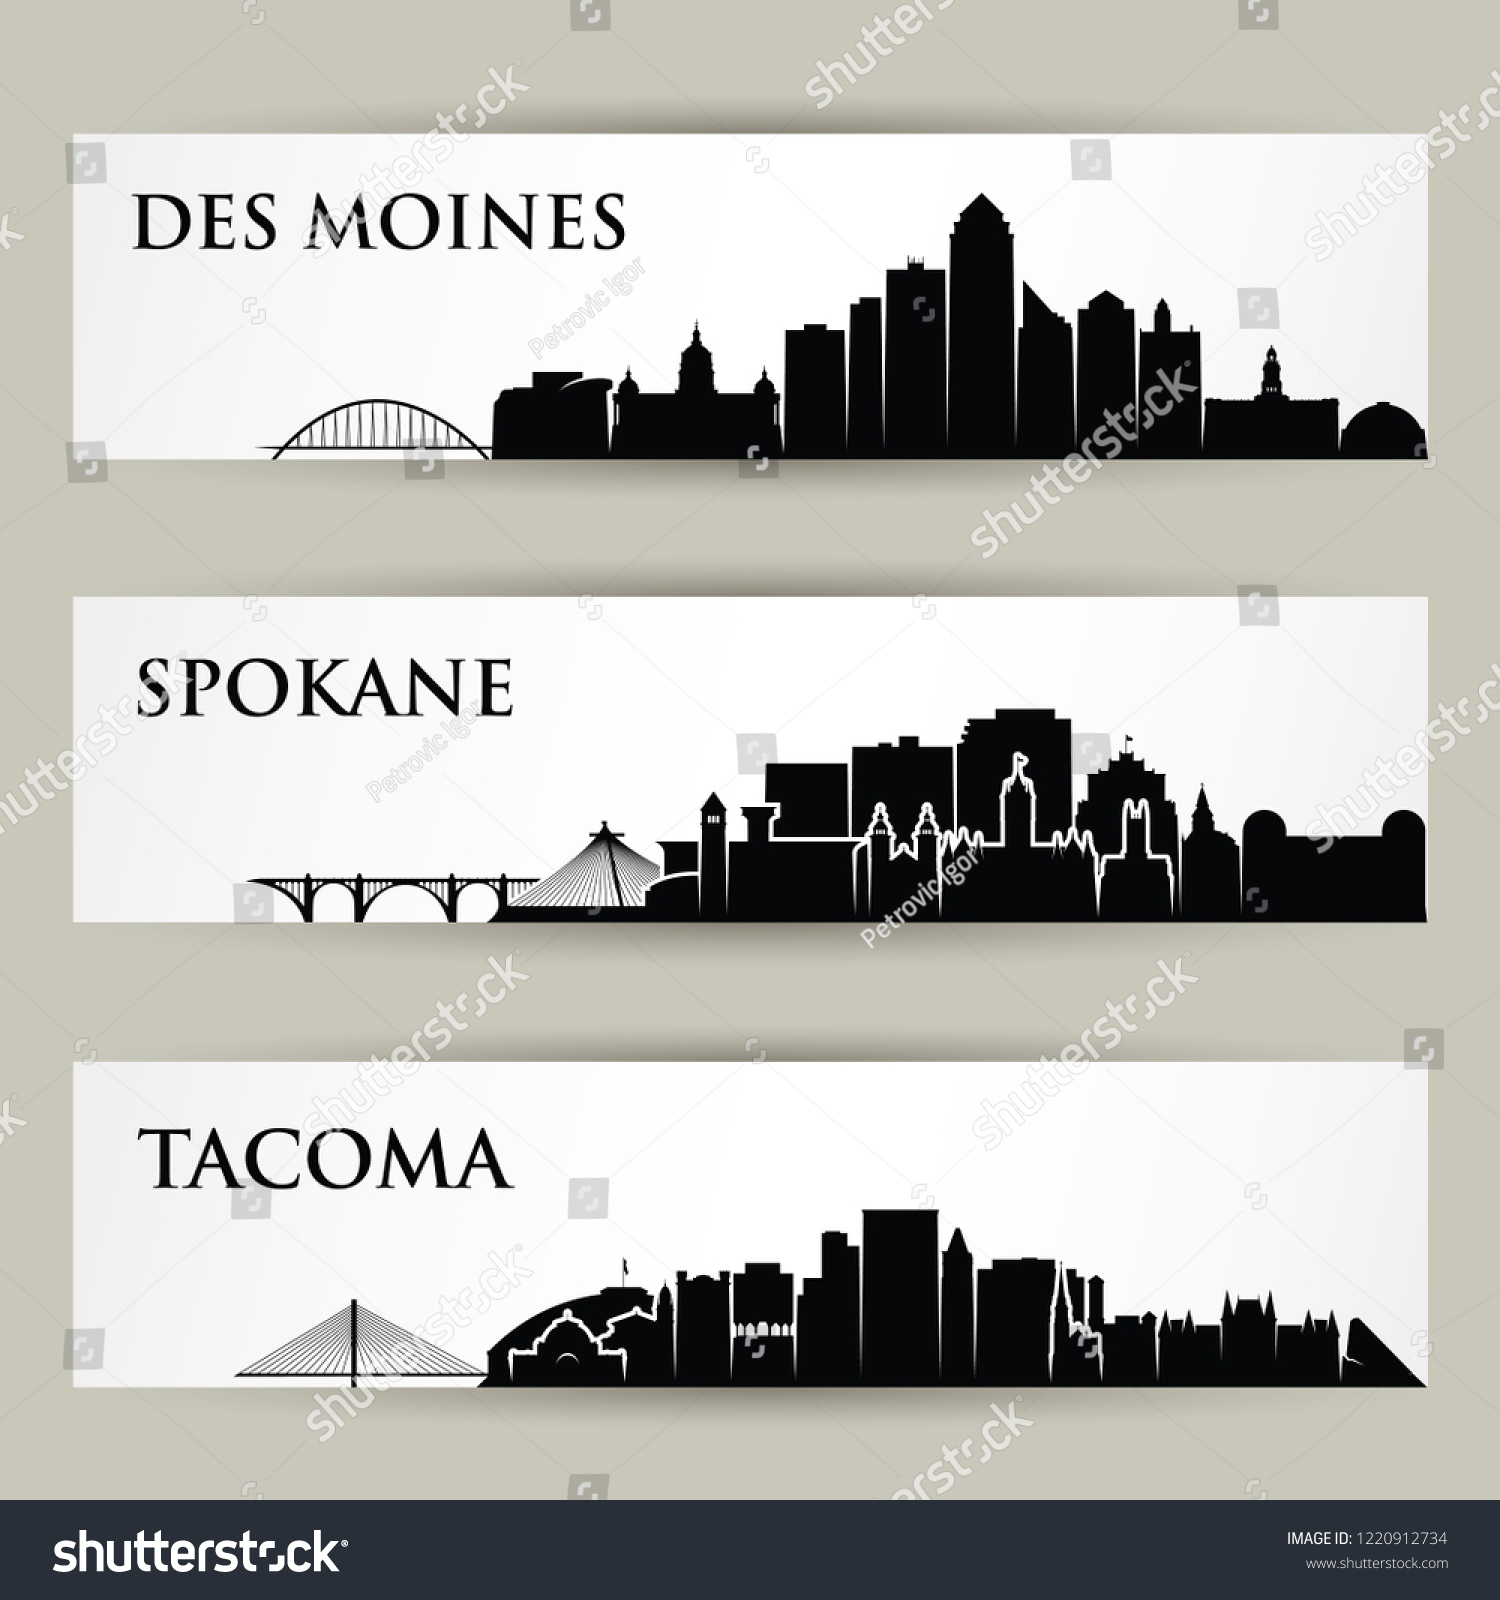 SVG of United States of America cities skylines - USA - Des Moines, Spokane, Tacoma, Iowa, Washington - isolated vector illustration svg